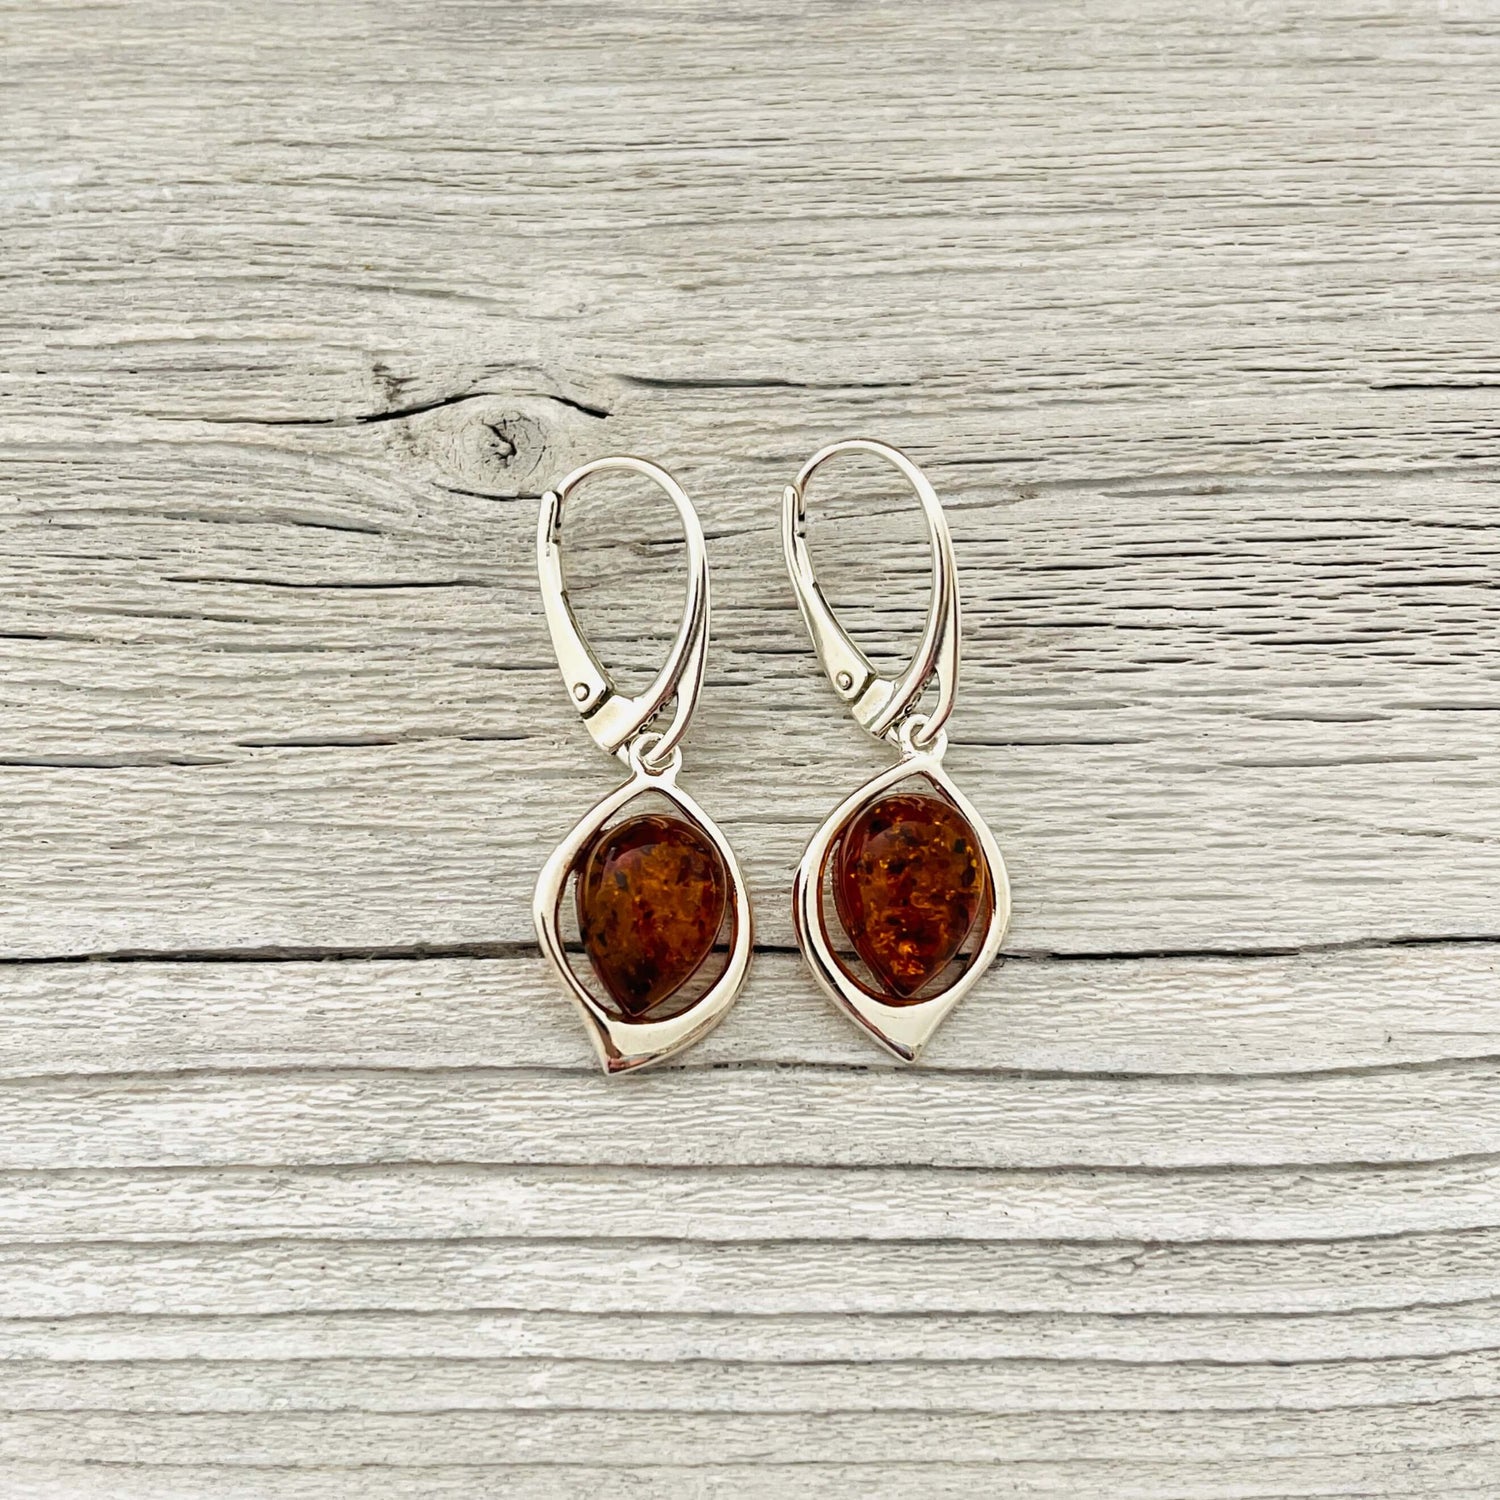 silver oval shaped amber earrings set in sterling silver